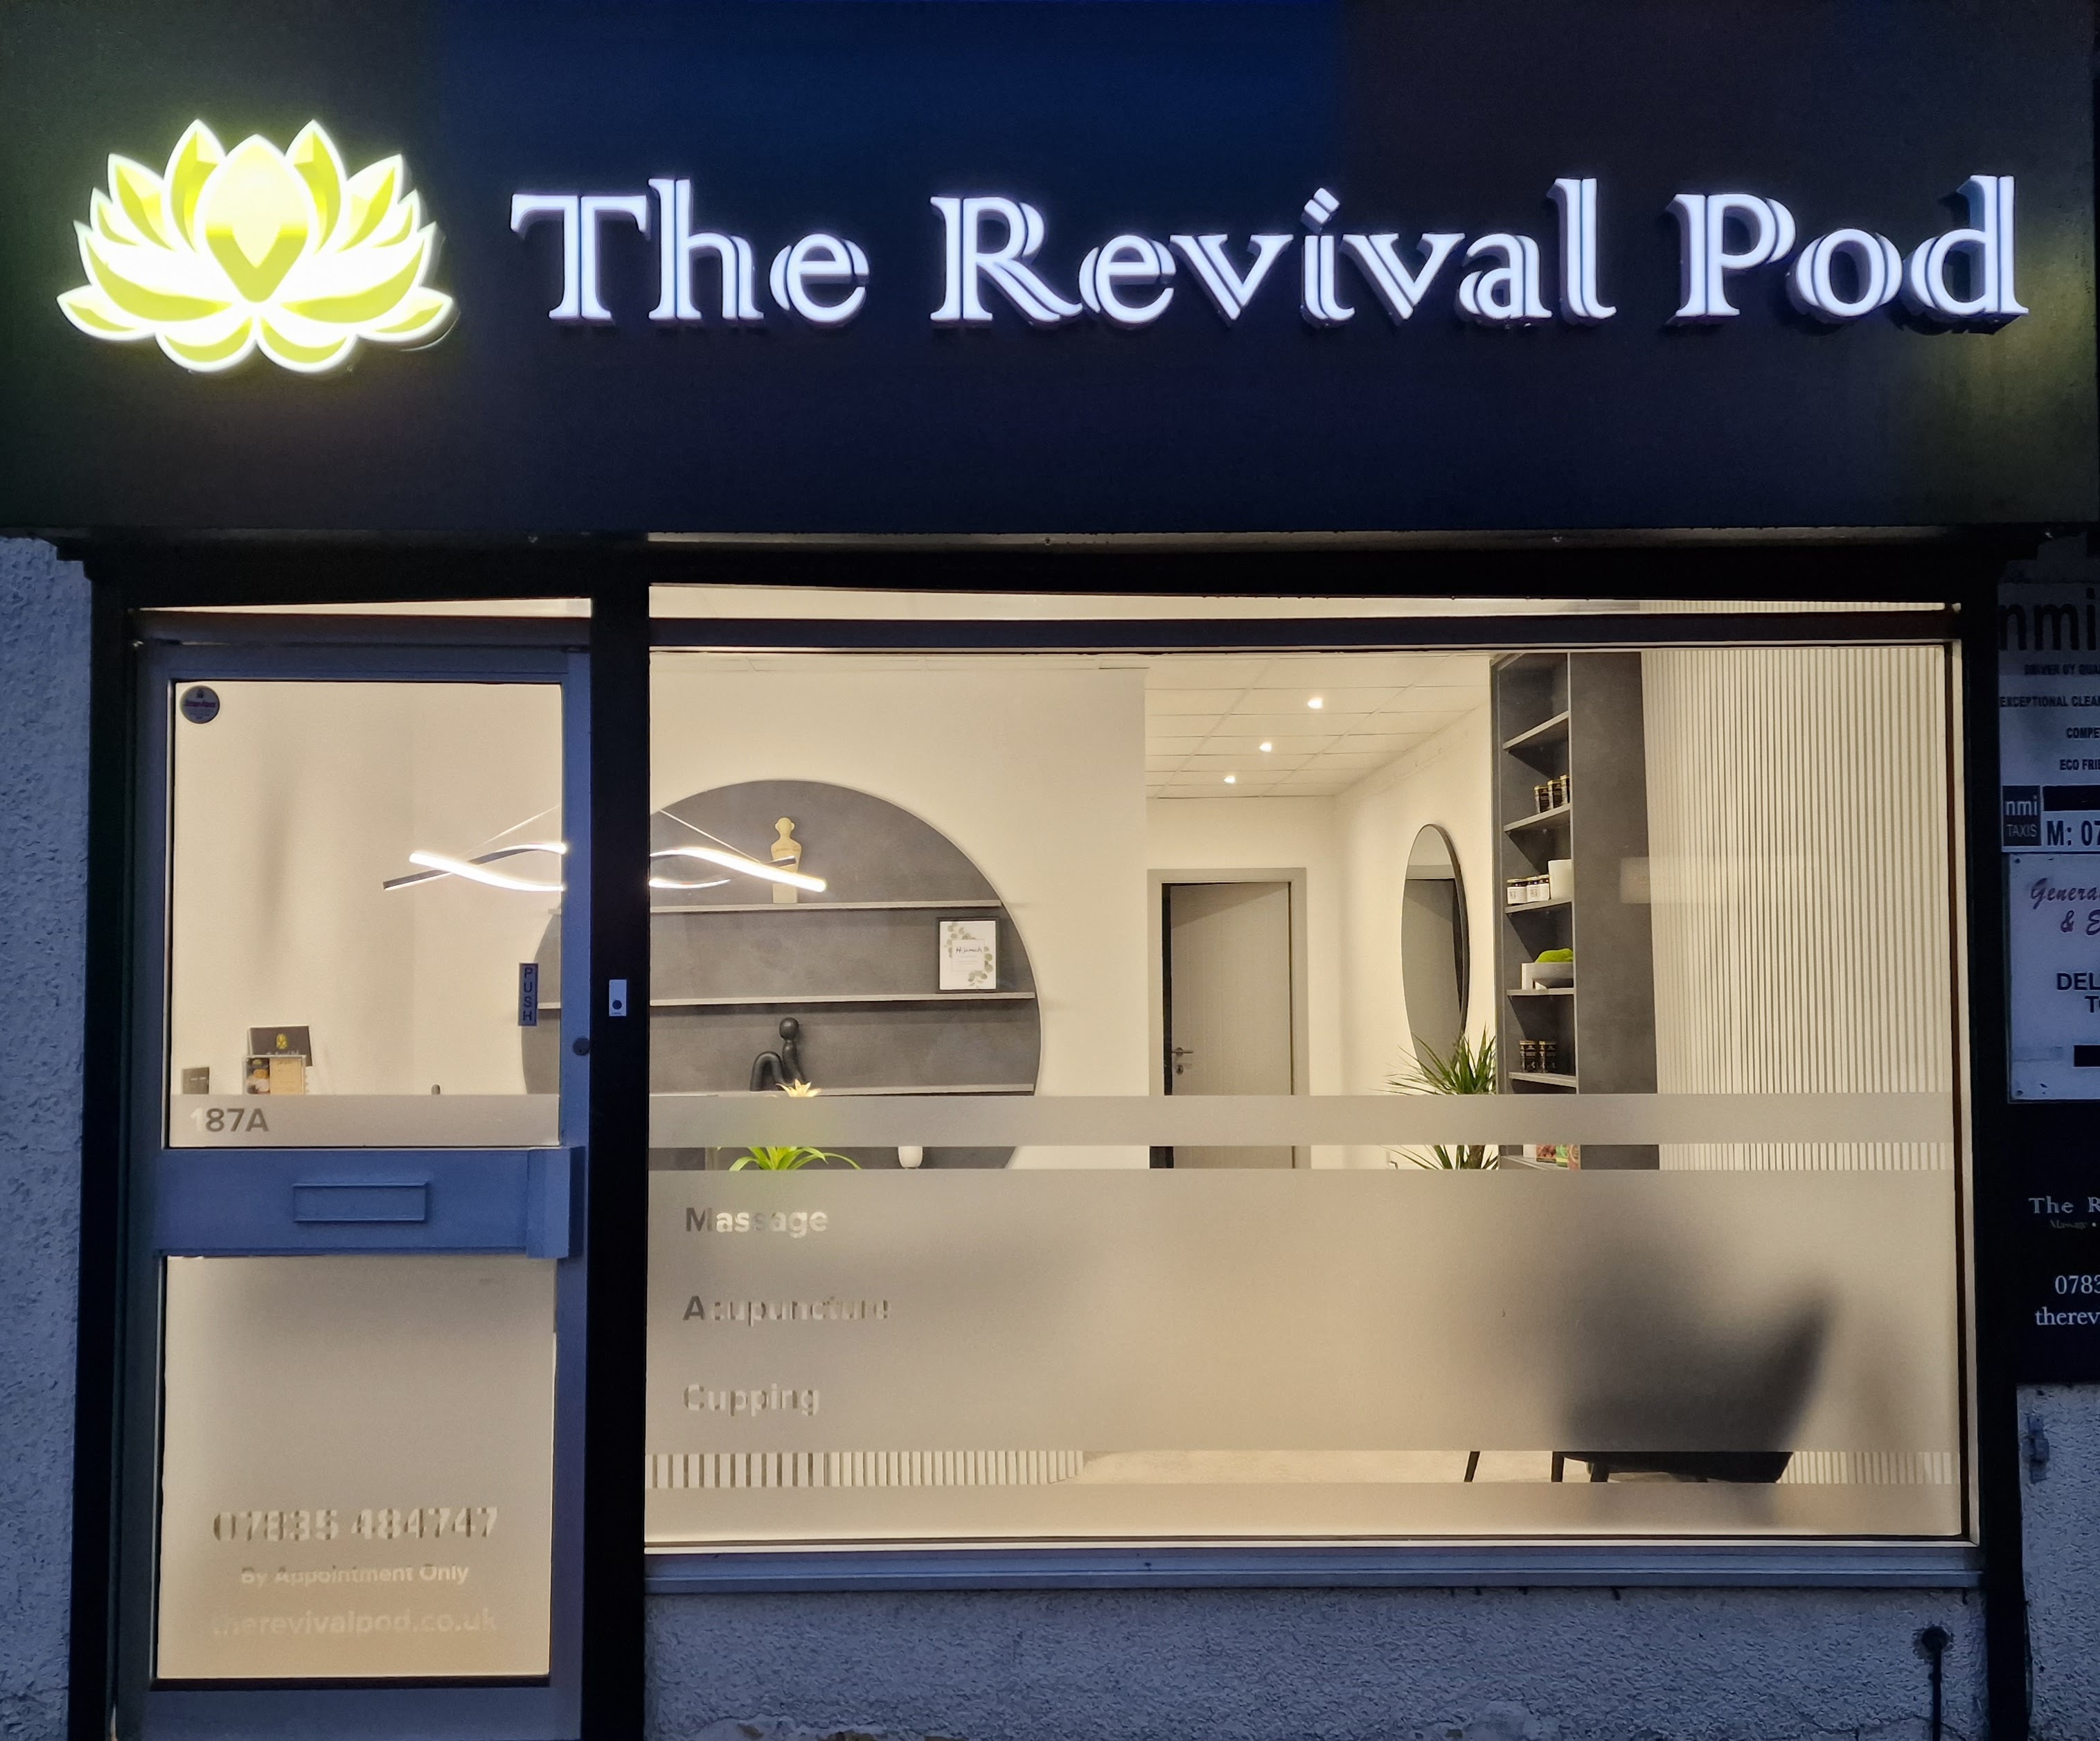 The Revival Pod